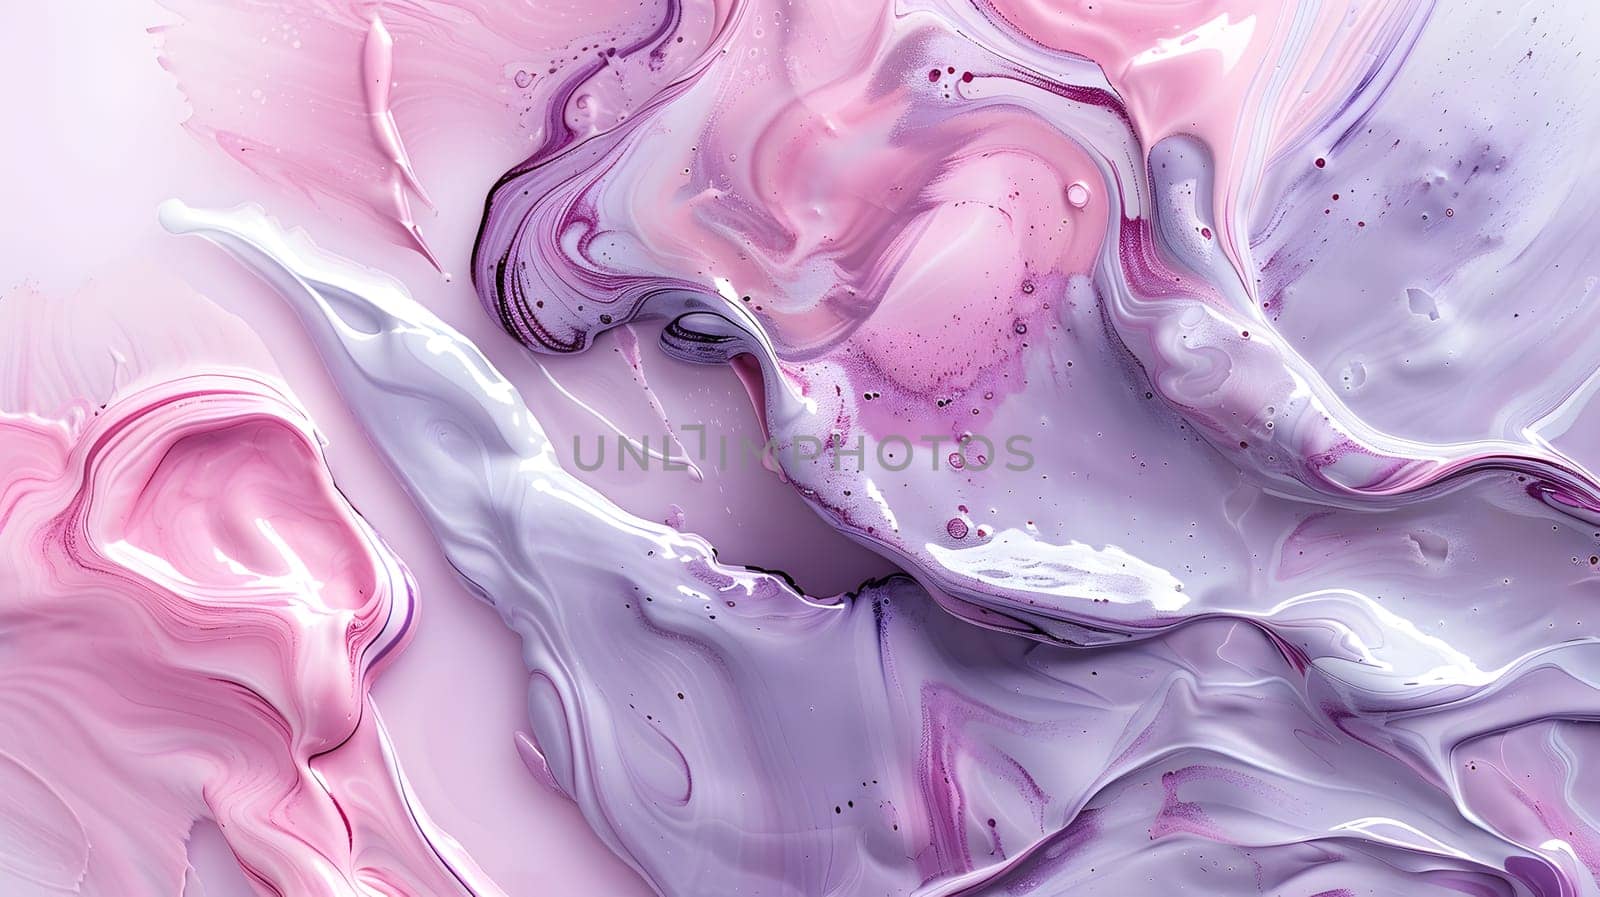 Closeup of a beautiful pink and purple paint swirl art masterpiece by Nadtochiy